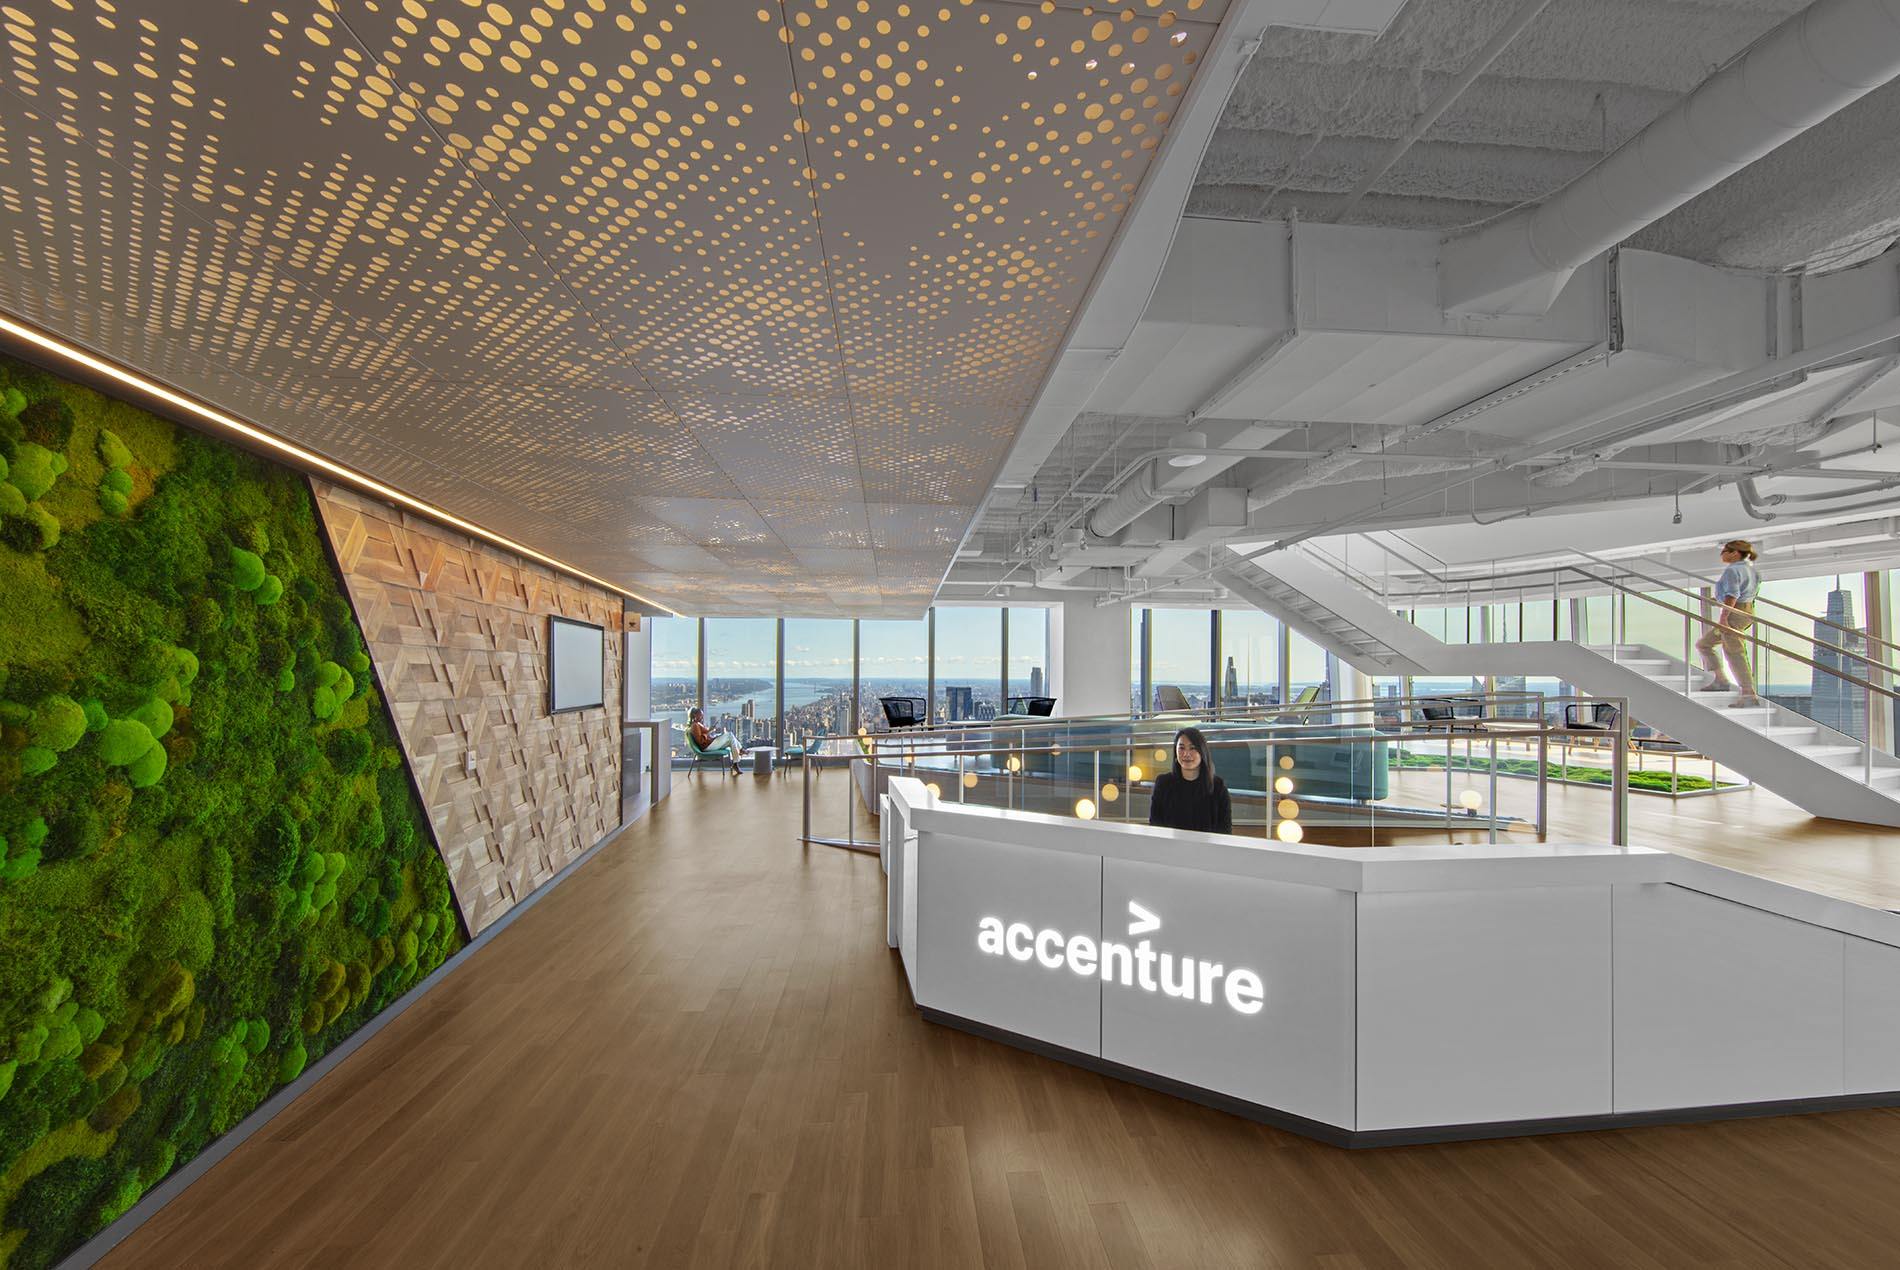 Accenture innovation hub epicor software demo